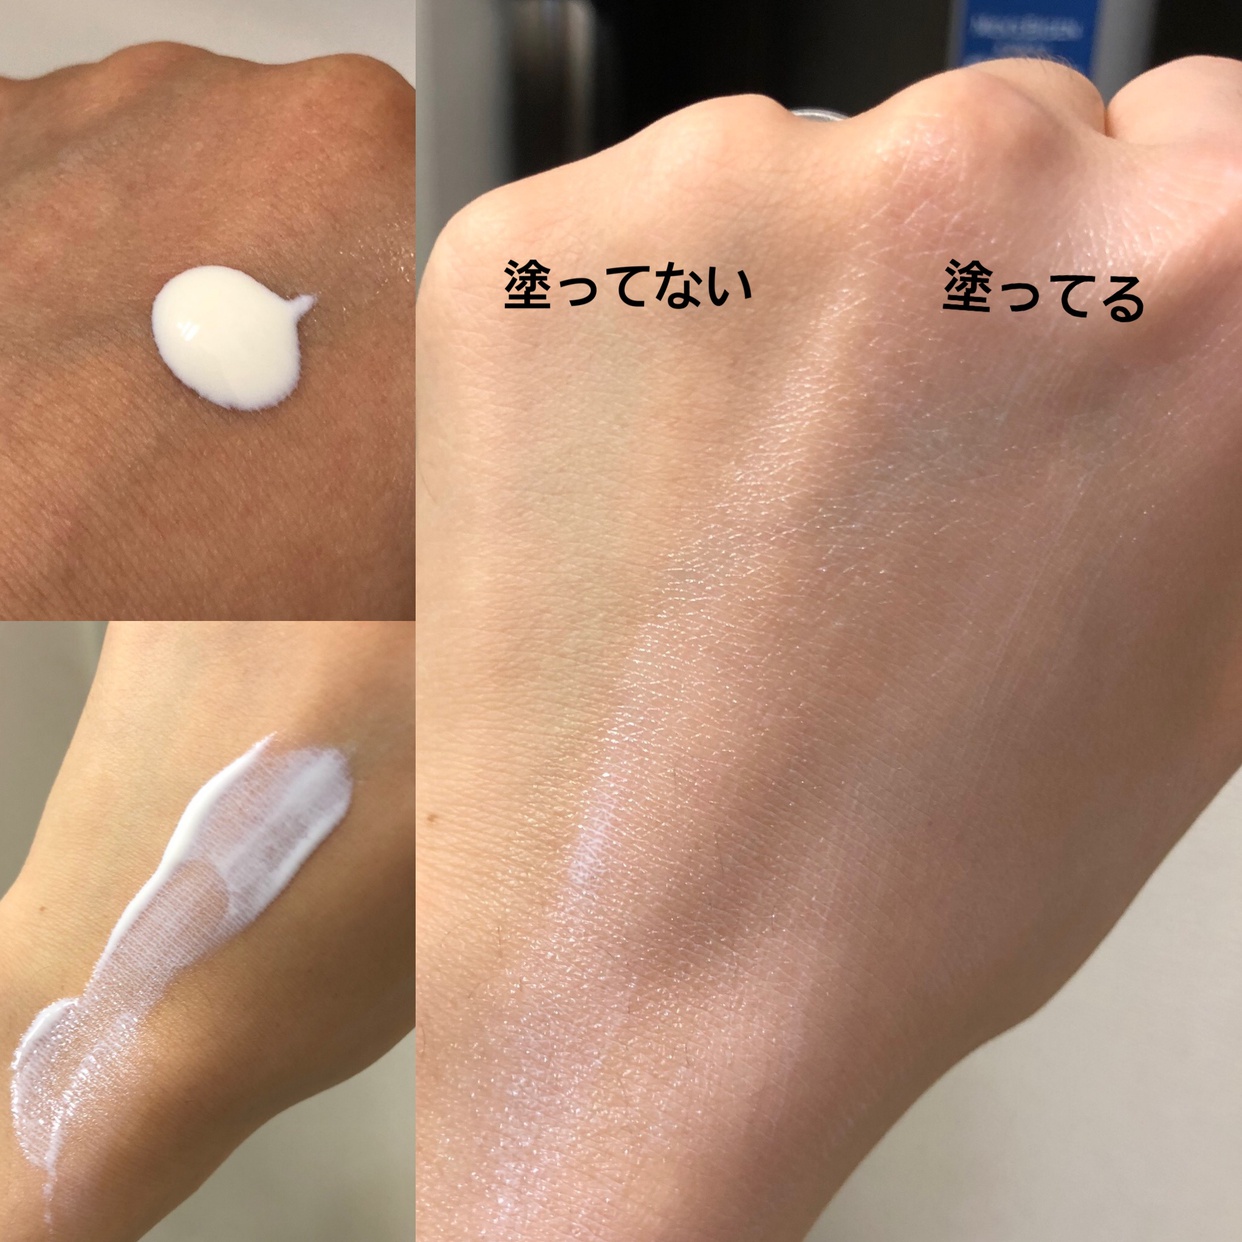 Moonyu(モーニュ) UV プロテクト ミルクの良い点・メリットに関するkhさんの口コミ画像2